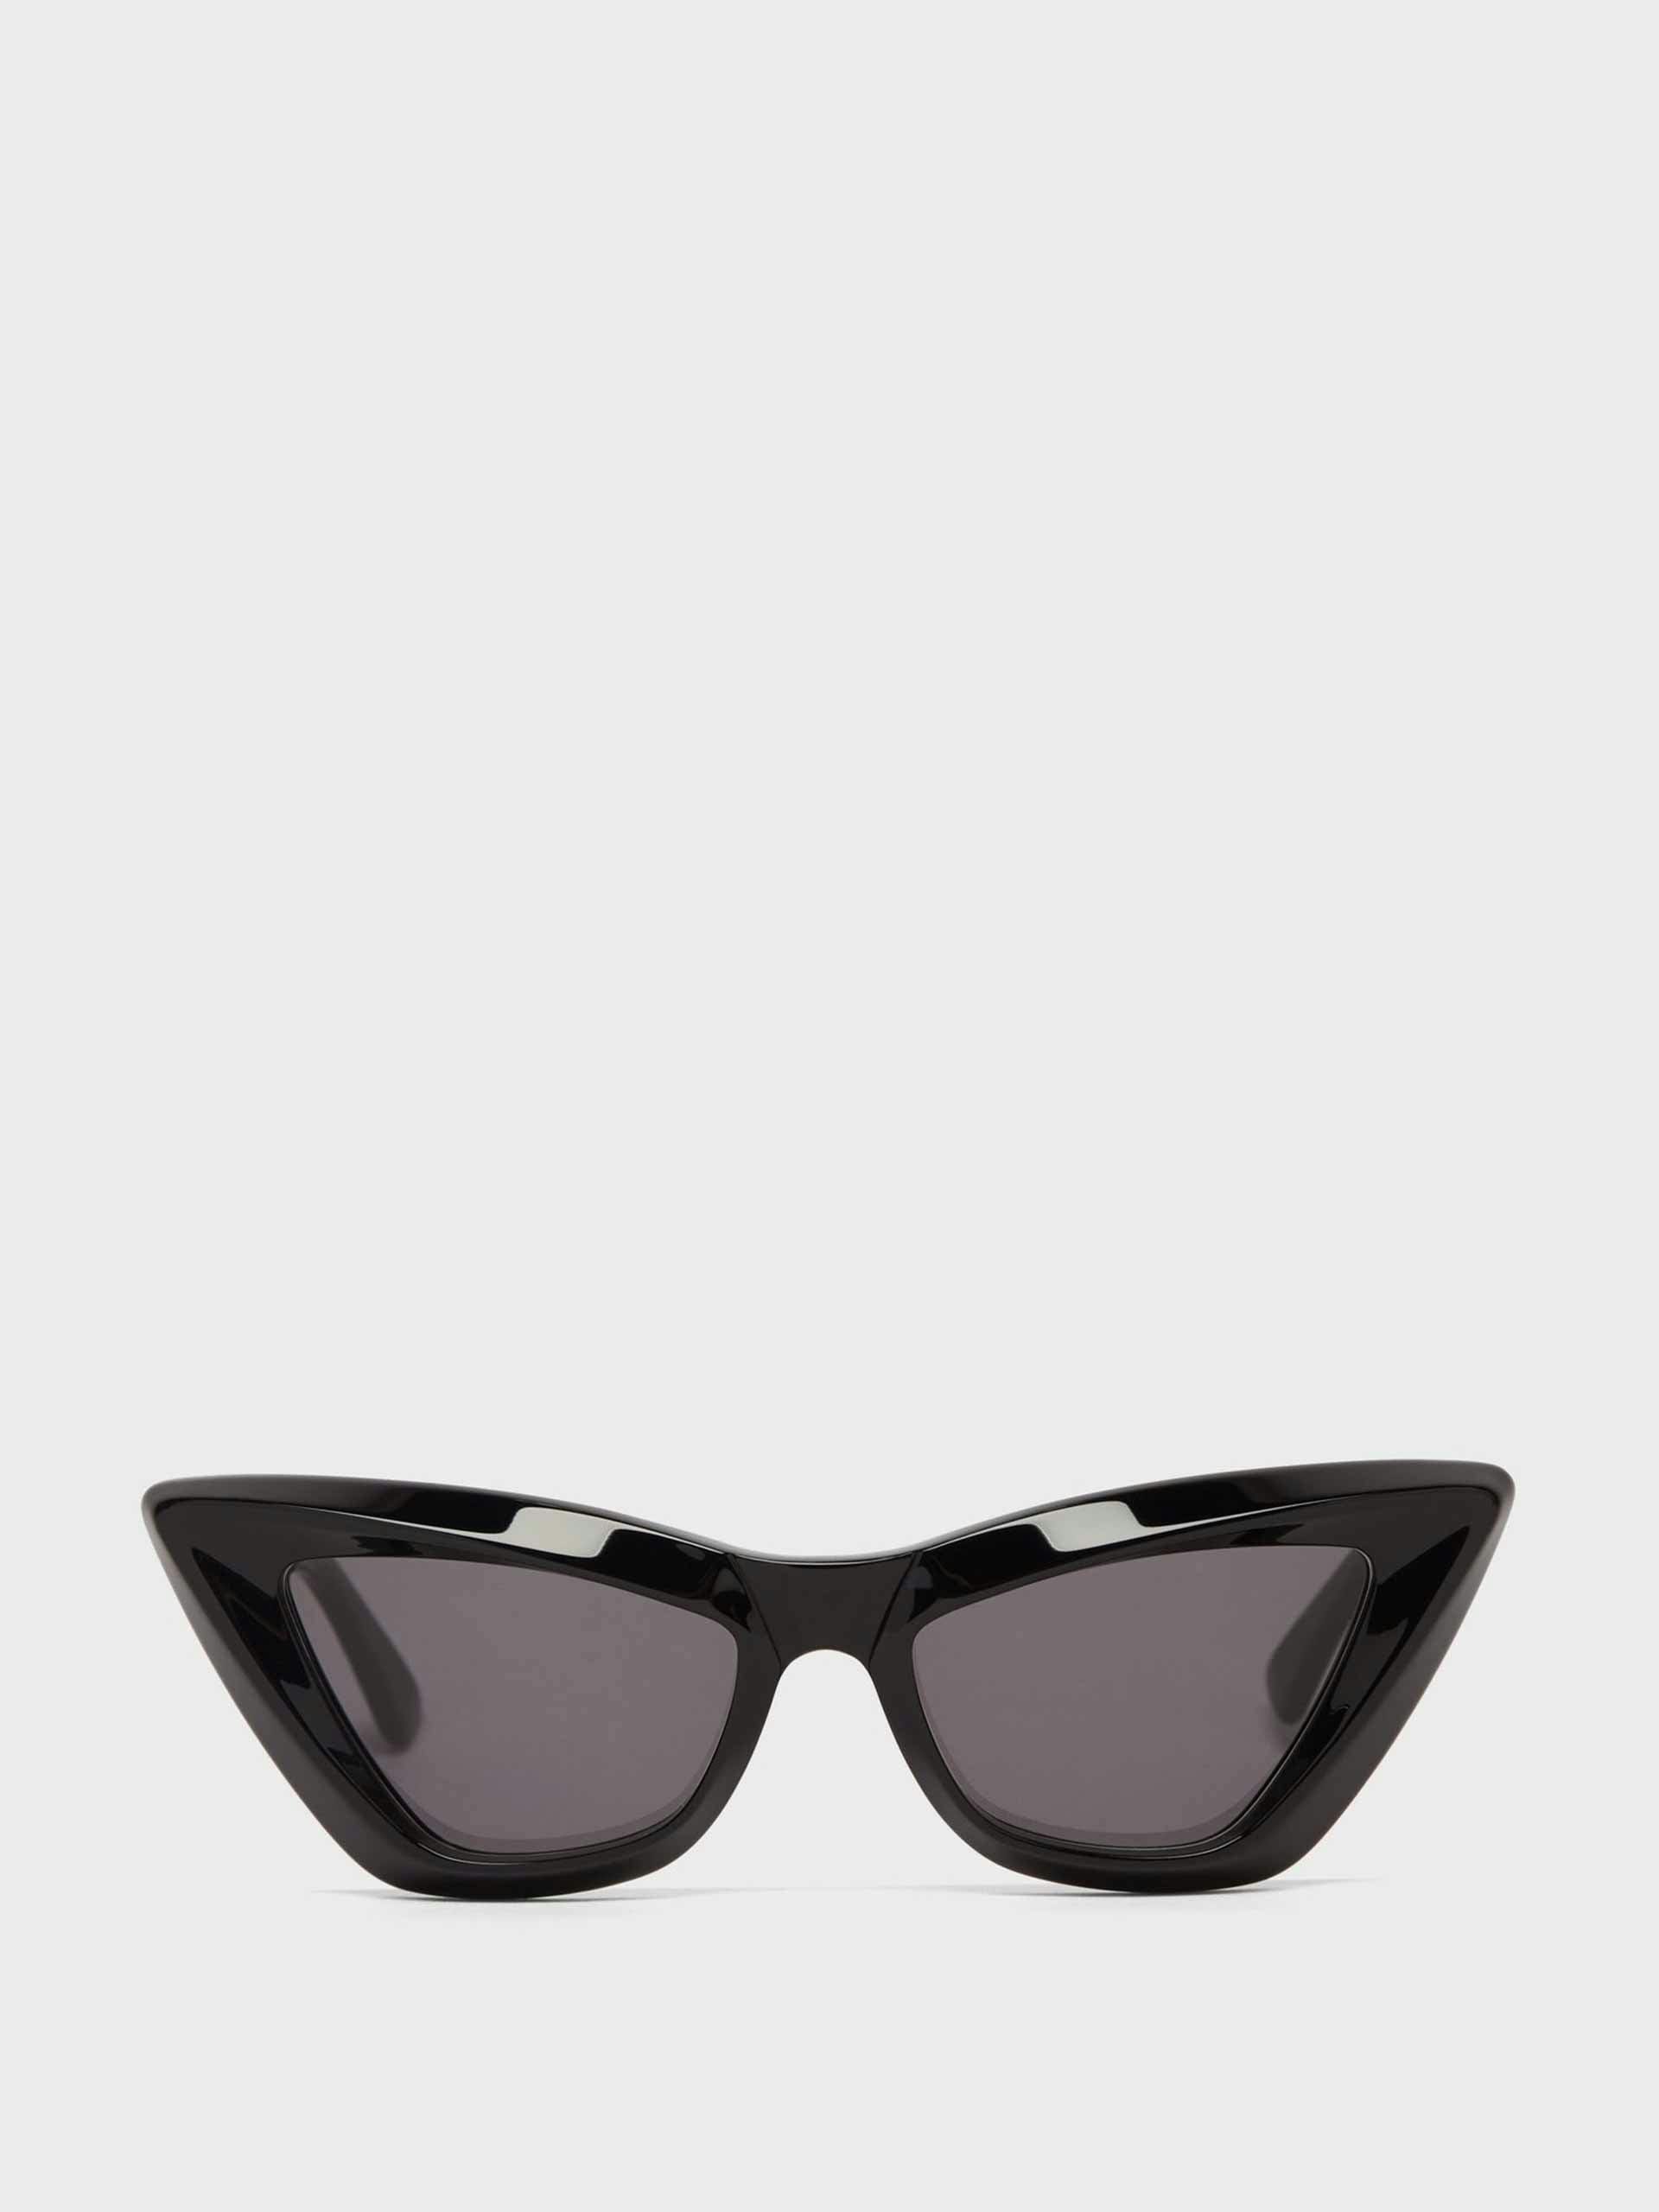 Black Cat-eye tortoiseshell-acetate sunglasses